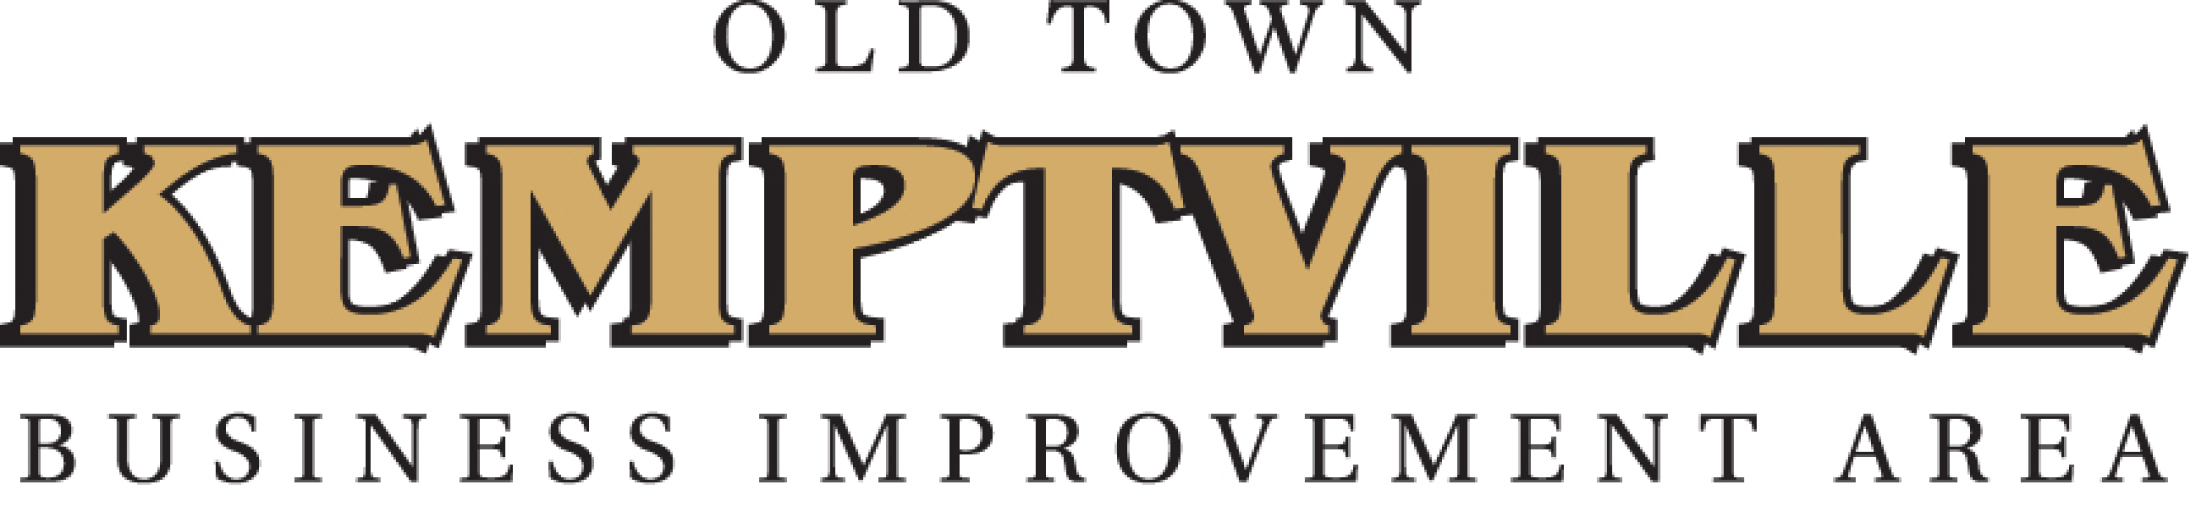 Old Town Kemptville BIA Textmark Logo on a White Background